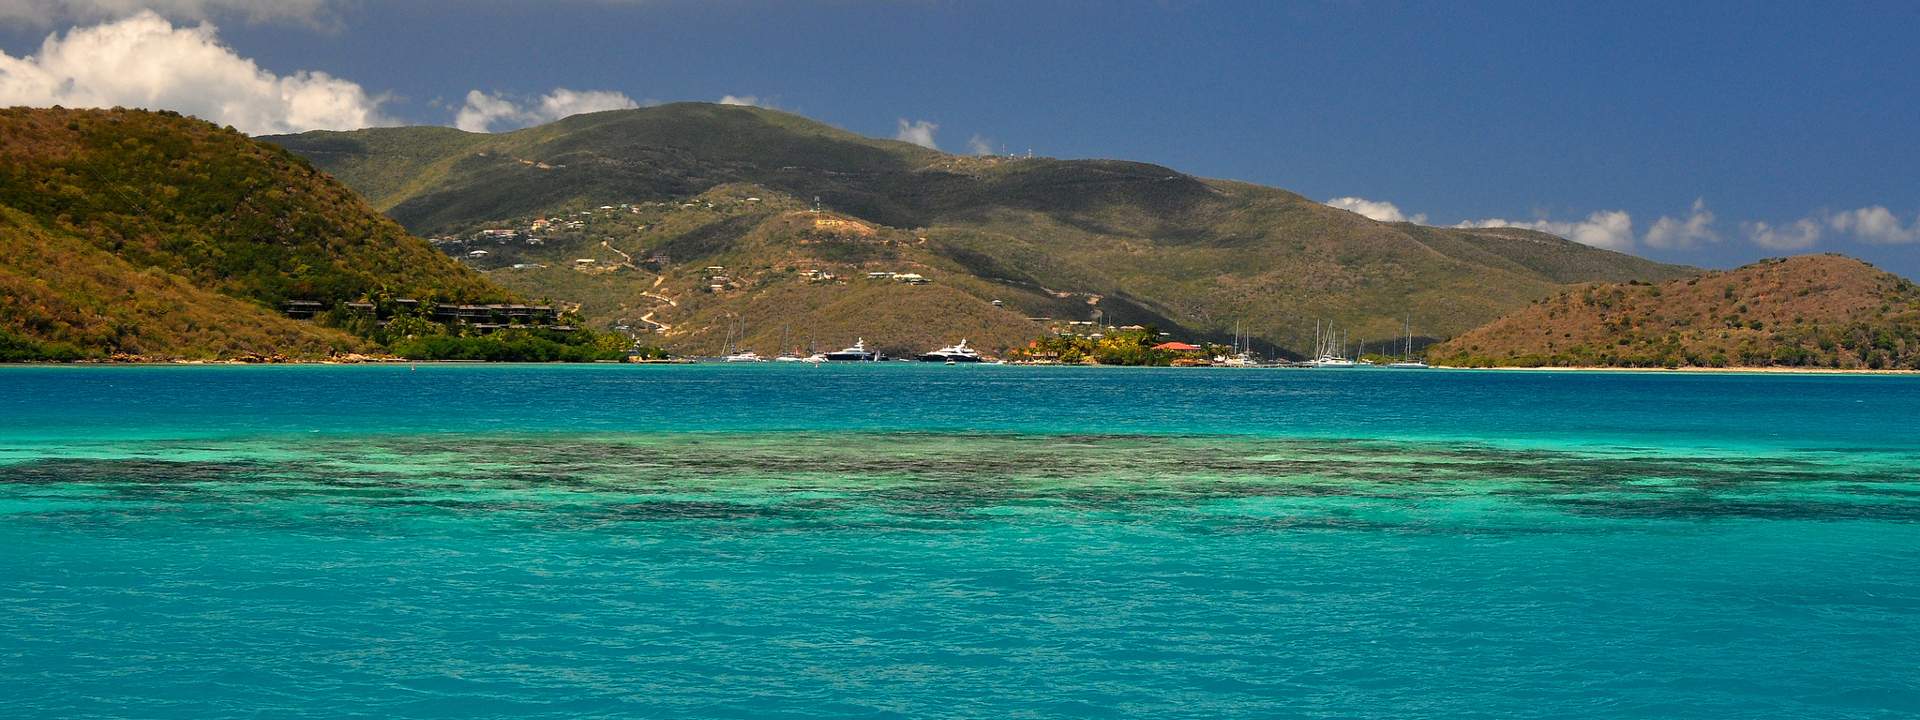 Cruise the archipelago of the Virgin Islands on a luxury catamaran